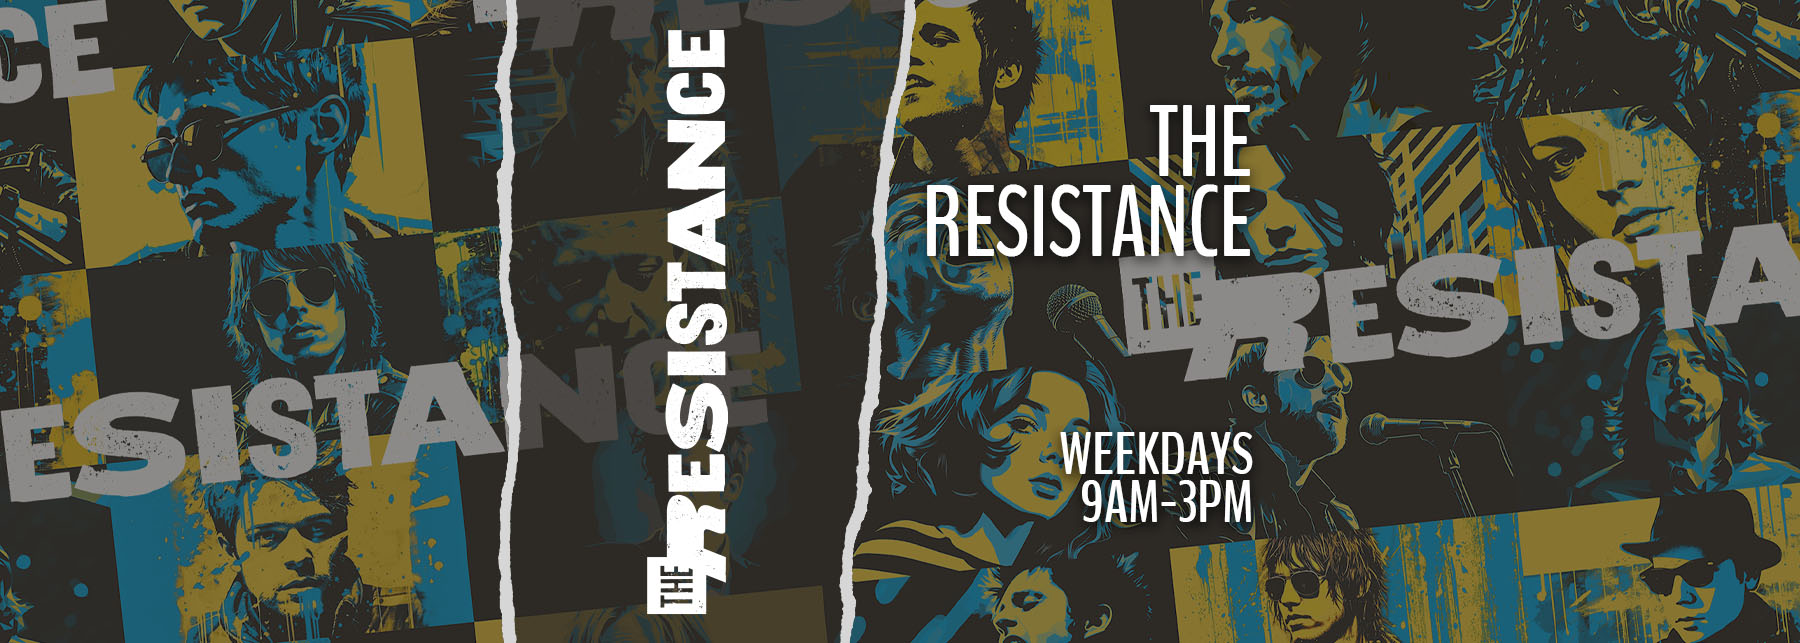 resistance 2 logo